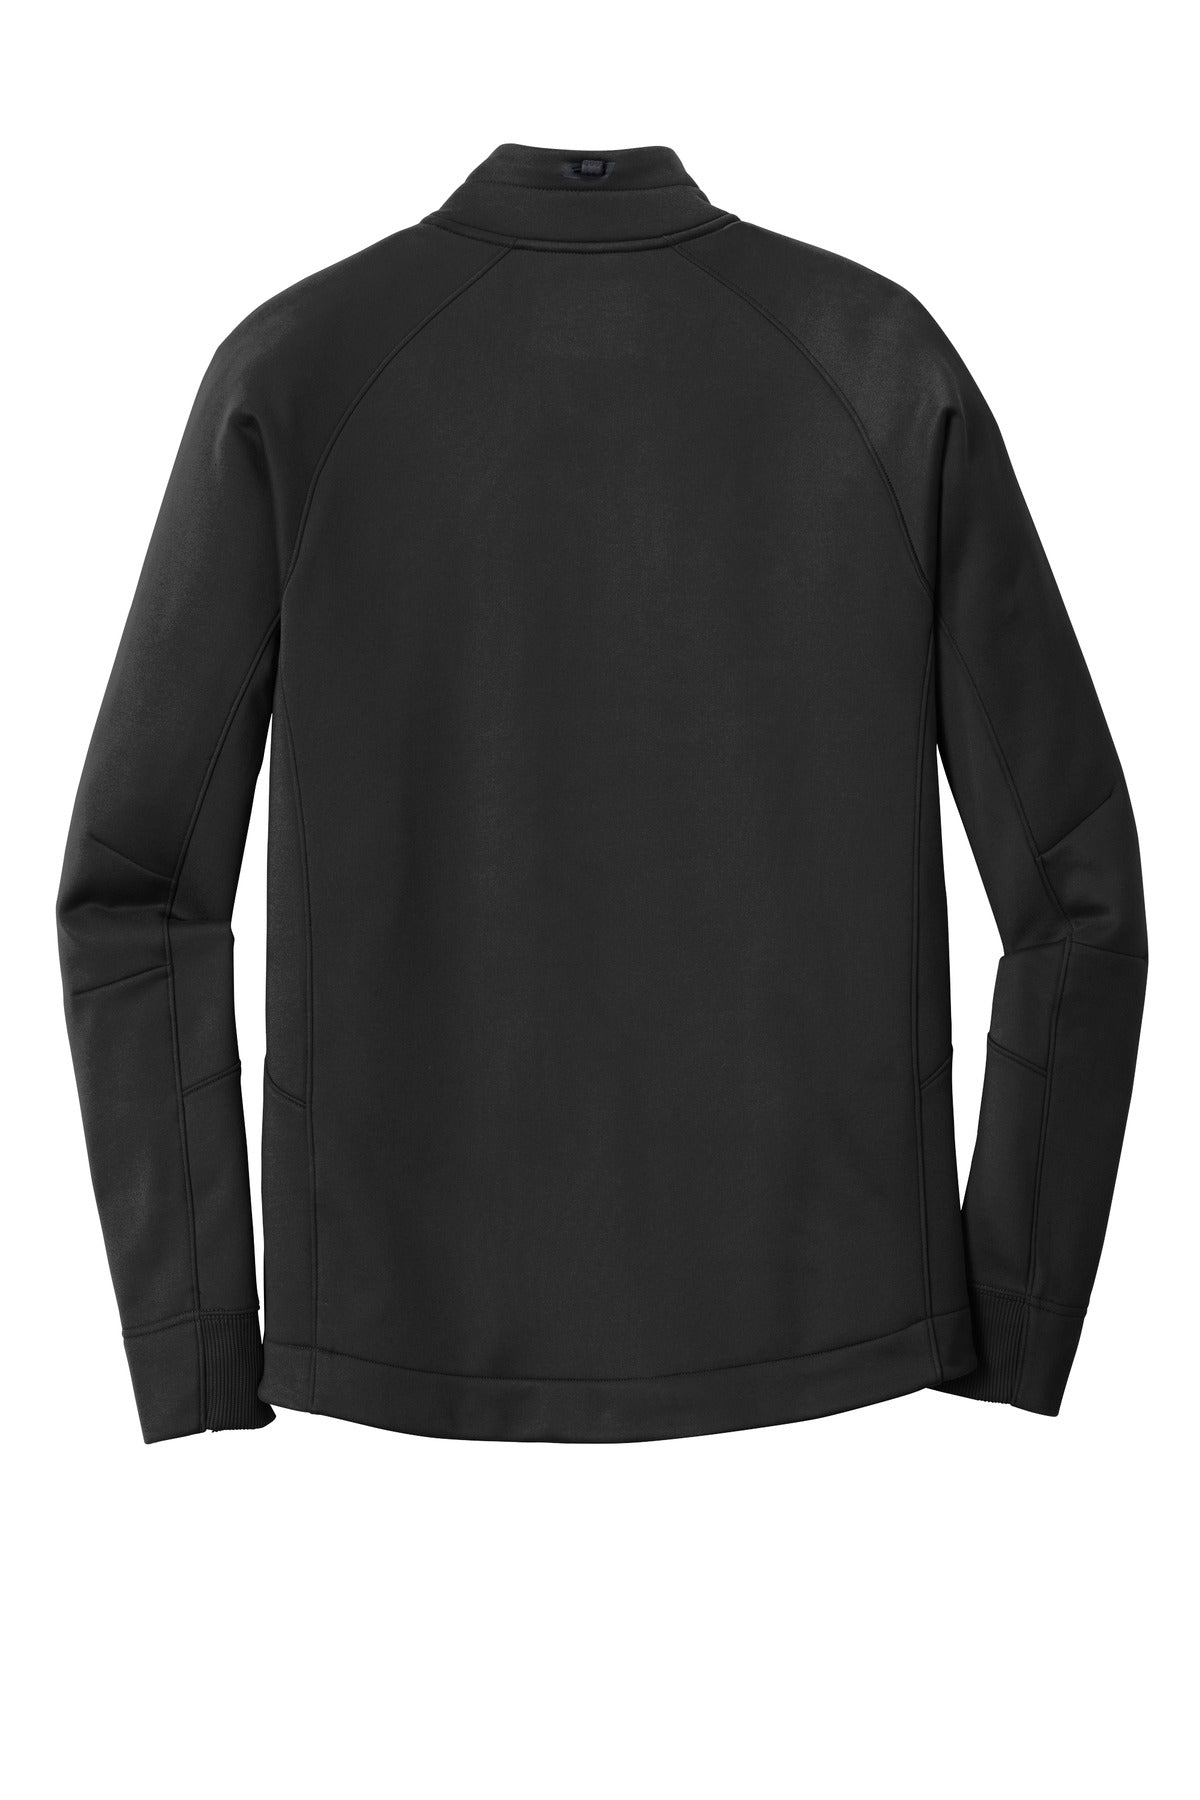 New Era Venue Fleece 1/4-Zip Pullover. NEA523